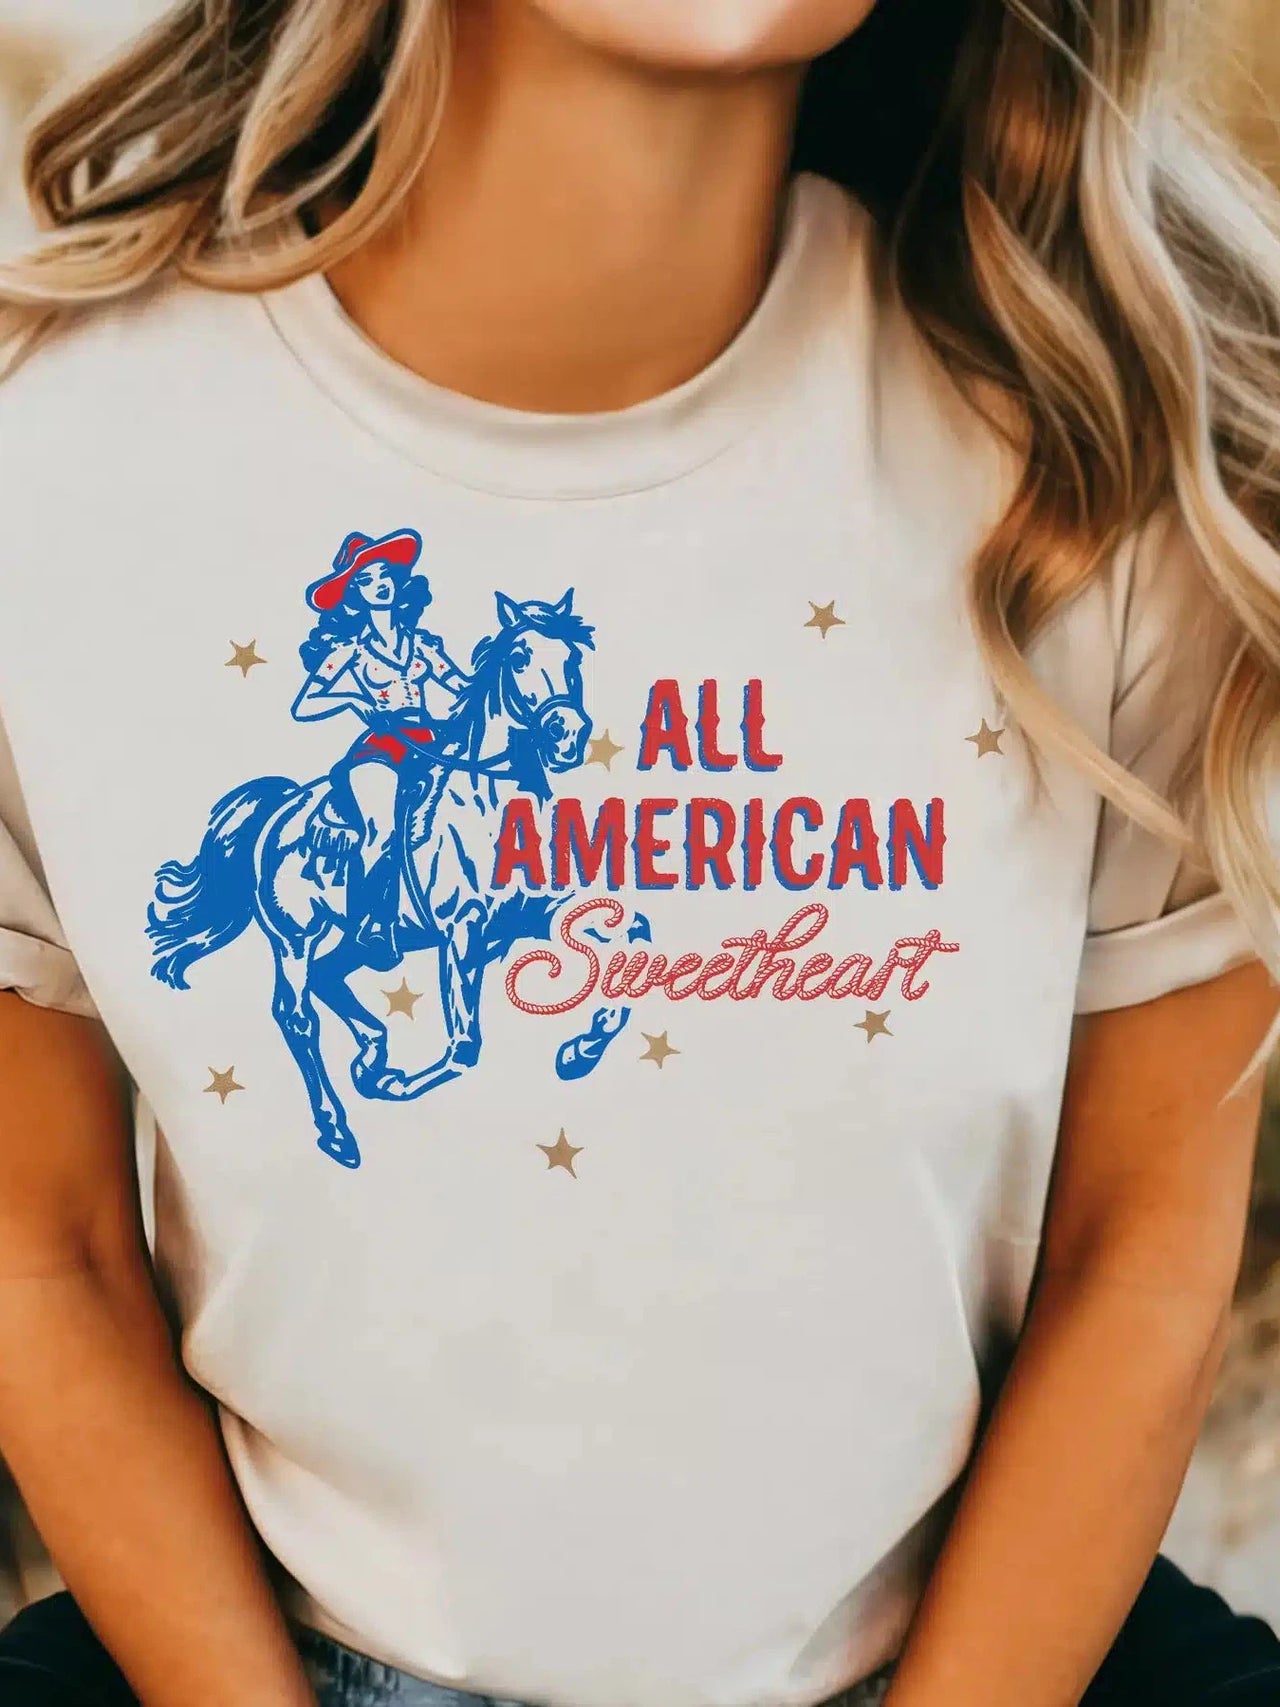 All American Sweetheart T shirt